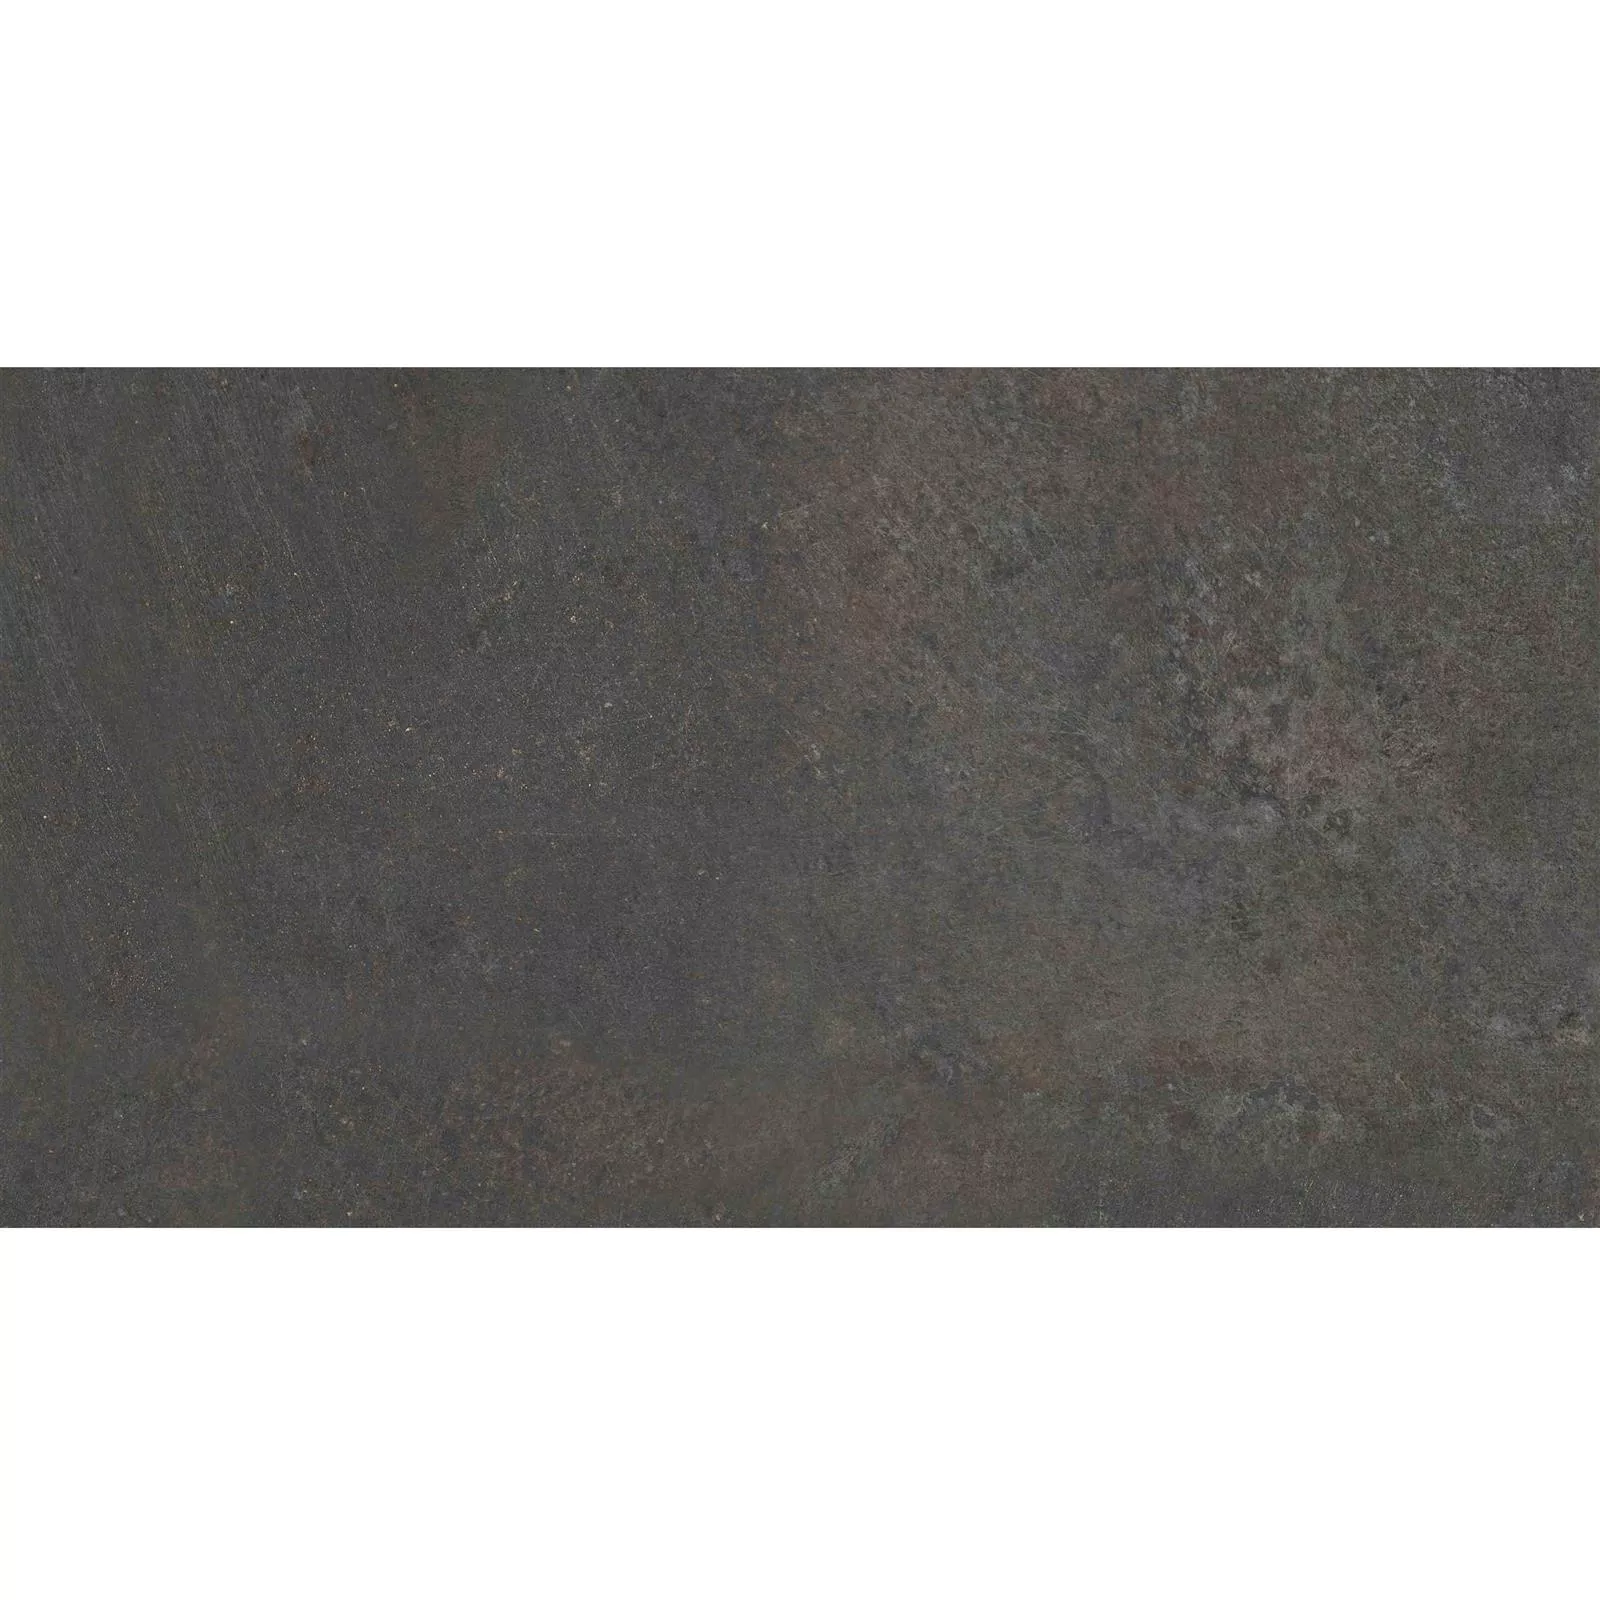 Podlahové Dlaždice Peaceway Antracitová 30x60cm